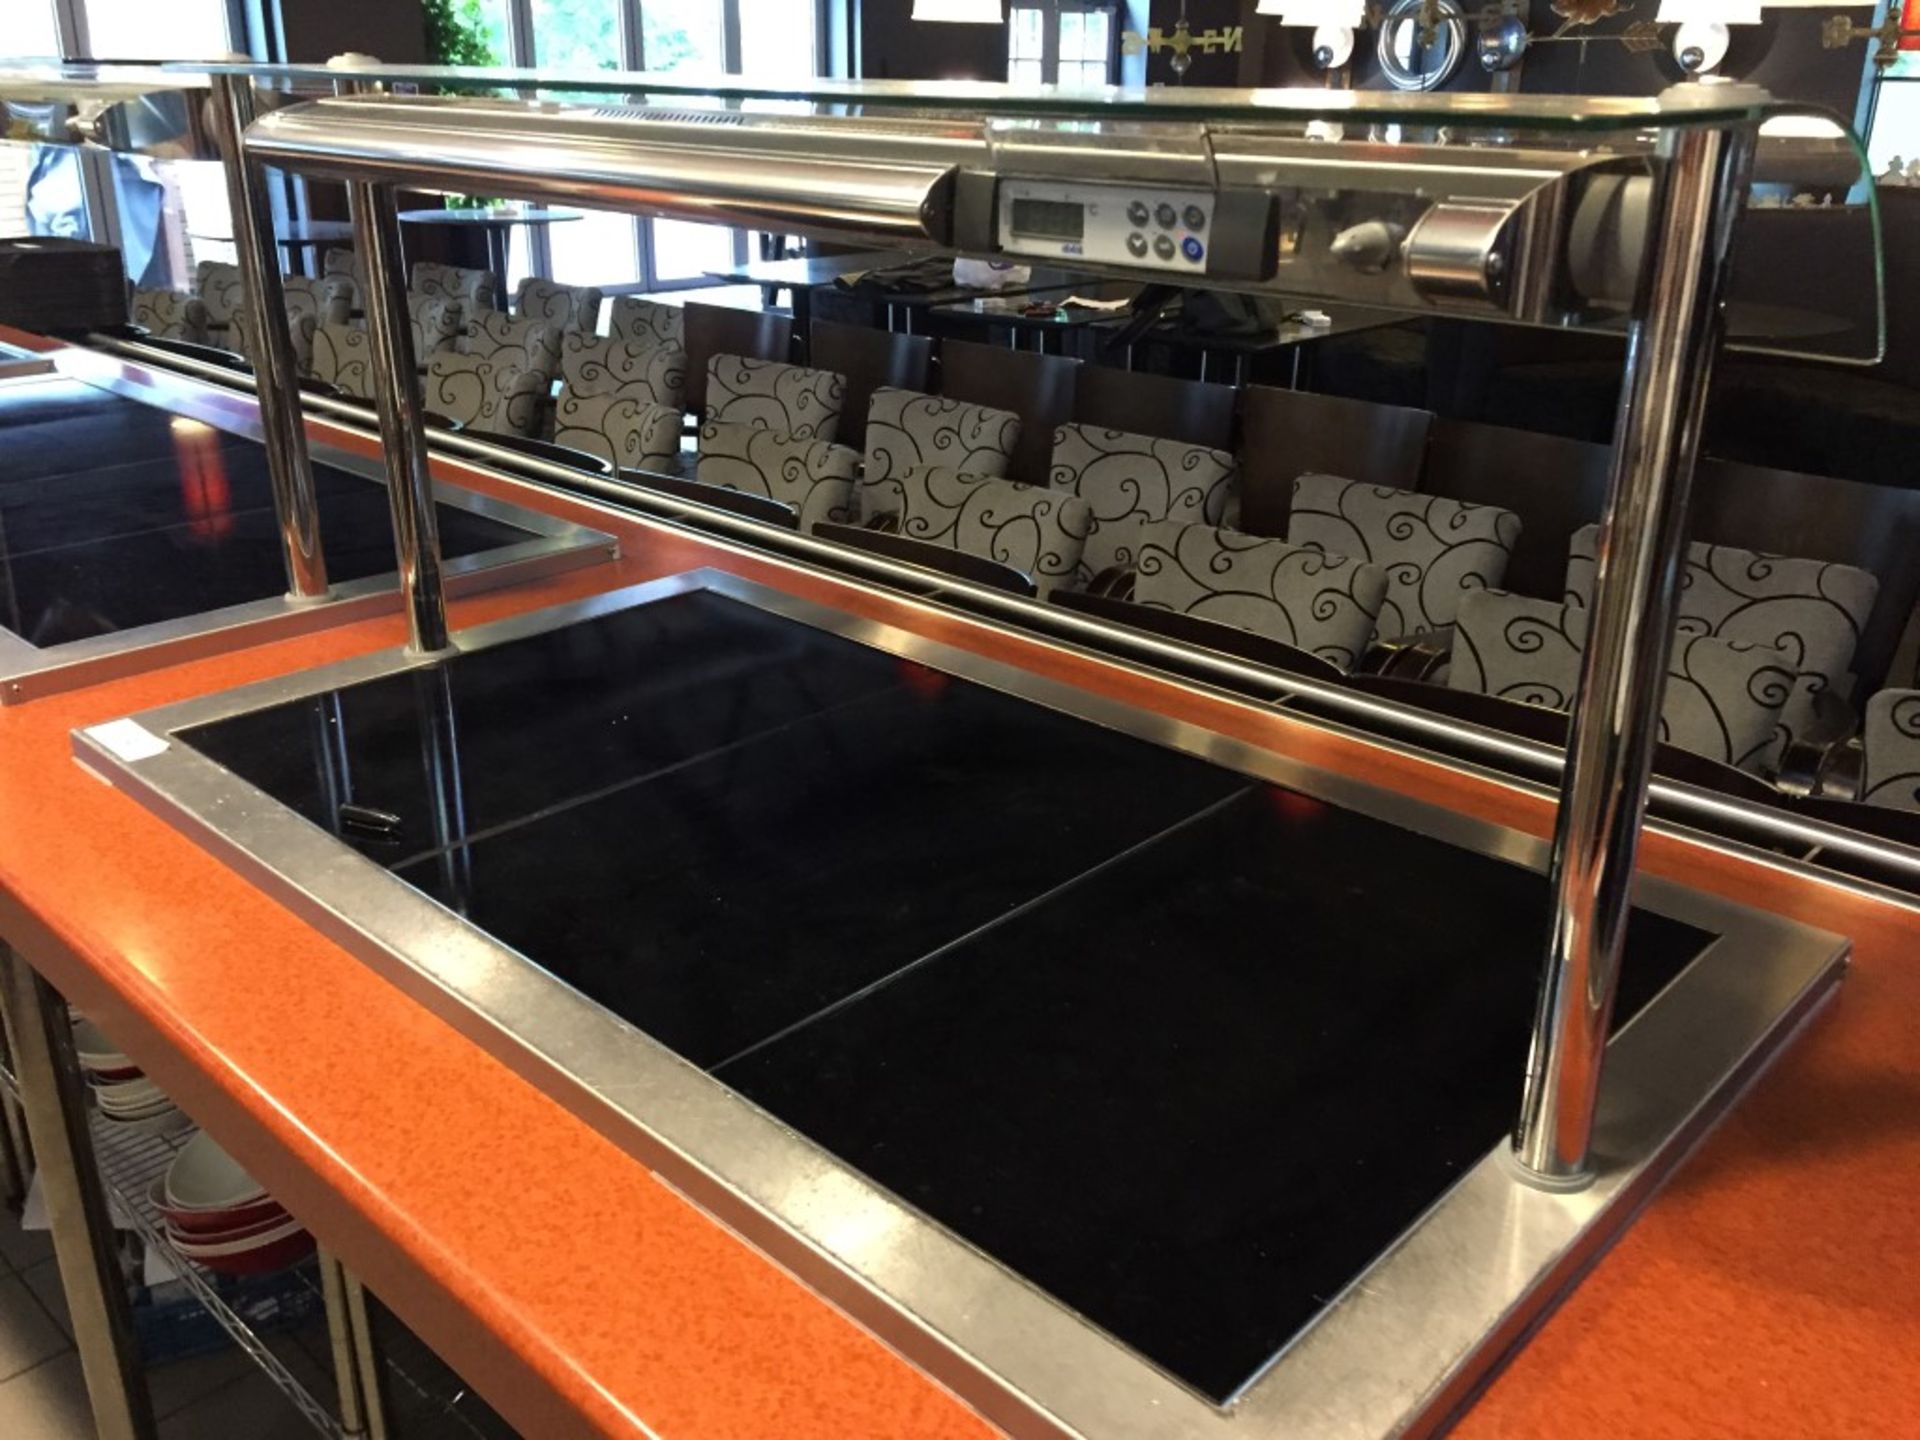 1 x CED Designline Self Serve Ceran Glass Hotplate - Counter Drop In Design With Overhead Heat - Image 3 of 4